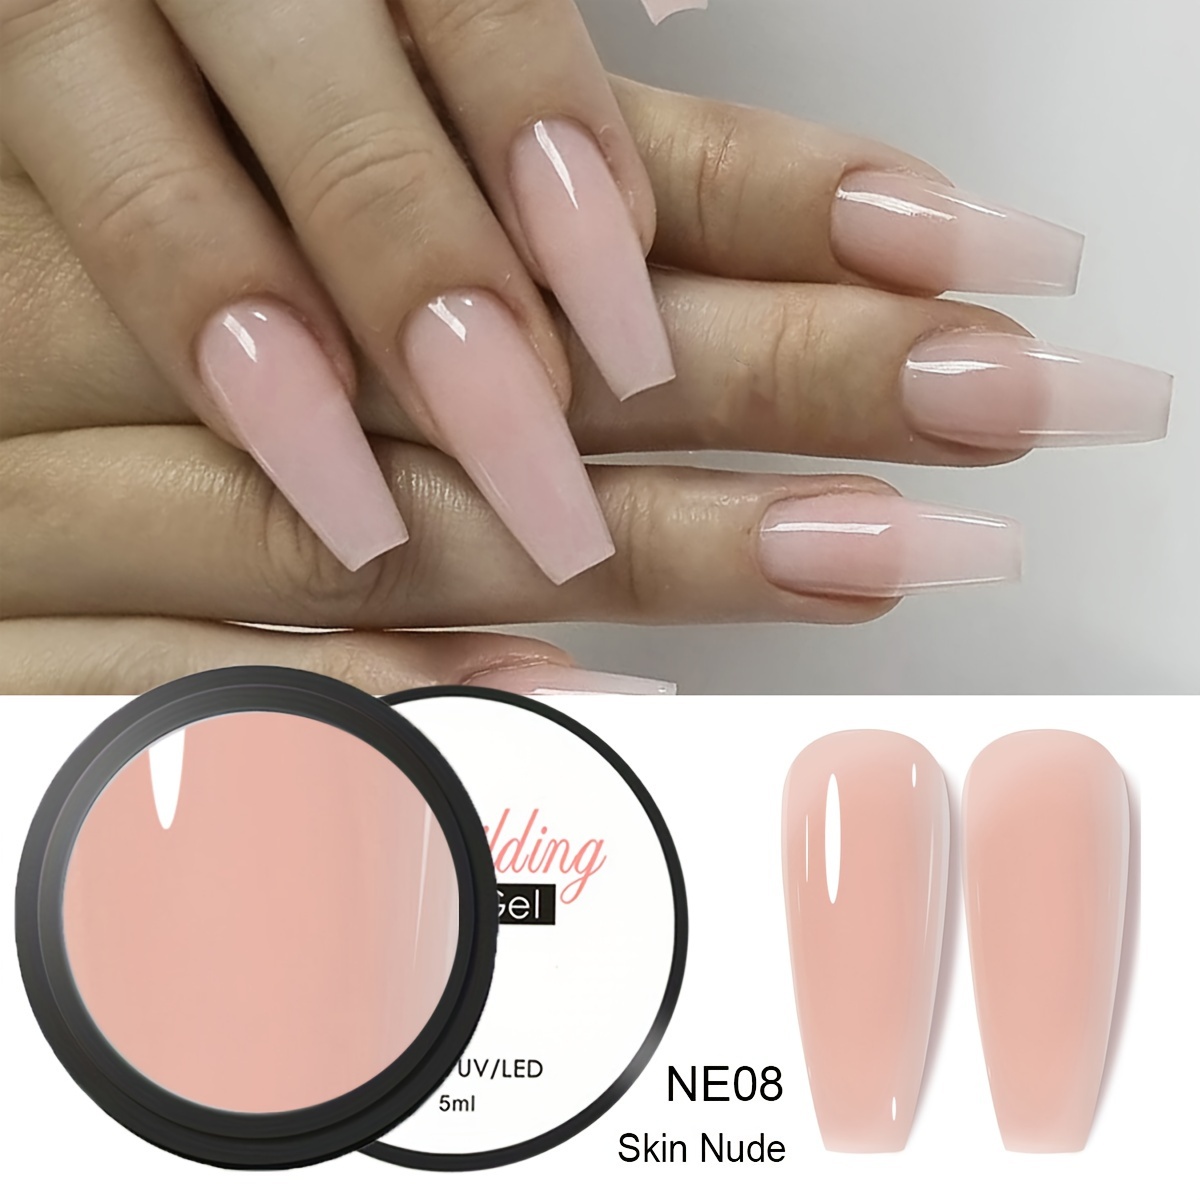 Gel extension natural - Feel Pink Beauty Salon